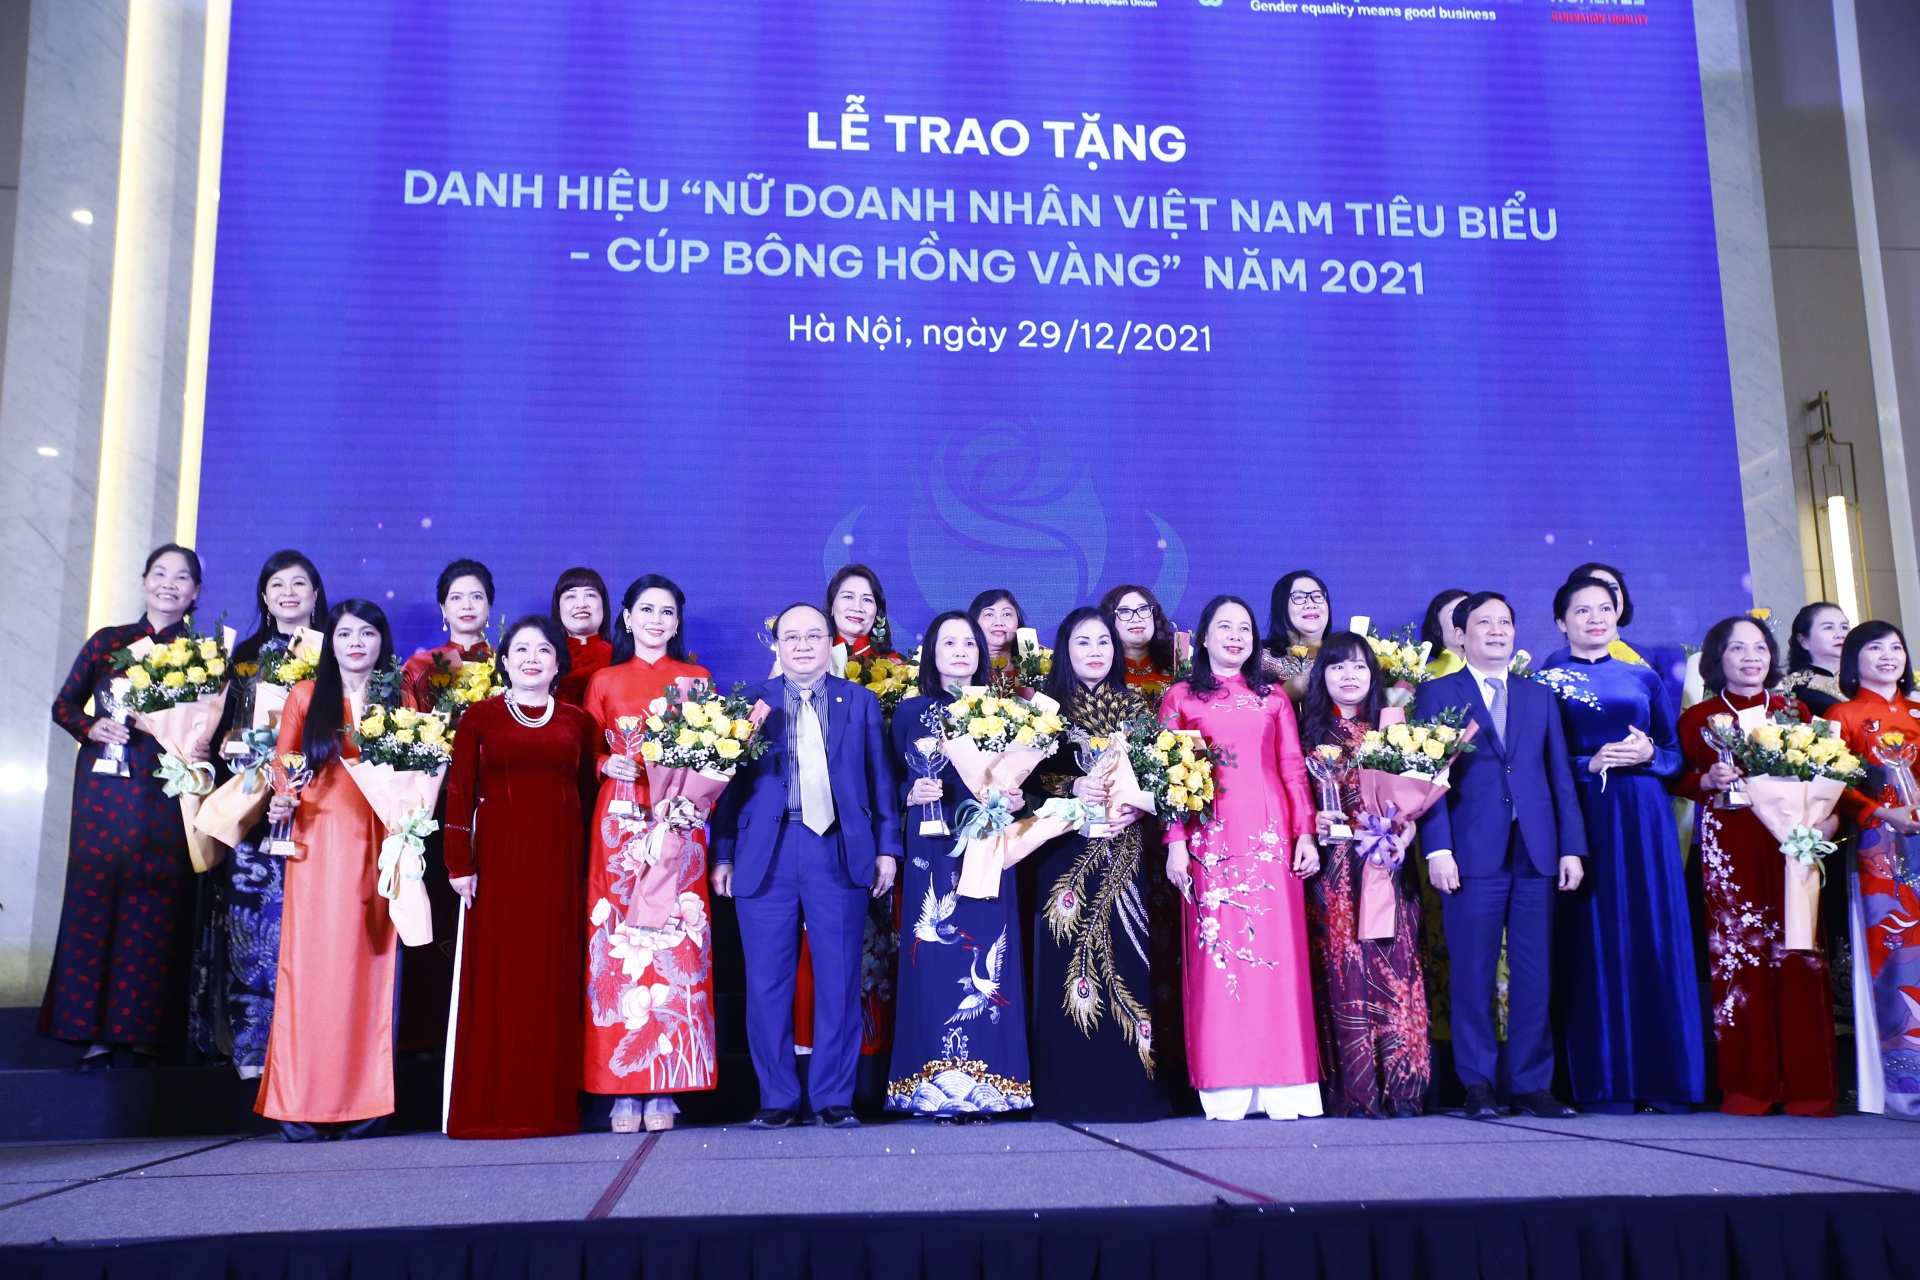 60 typical Vietnamese businesswomen receive the Golden Rose Award